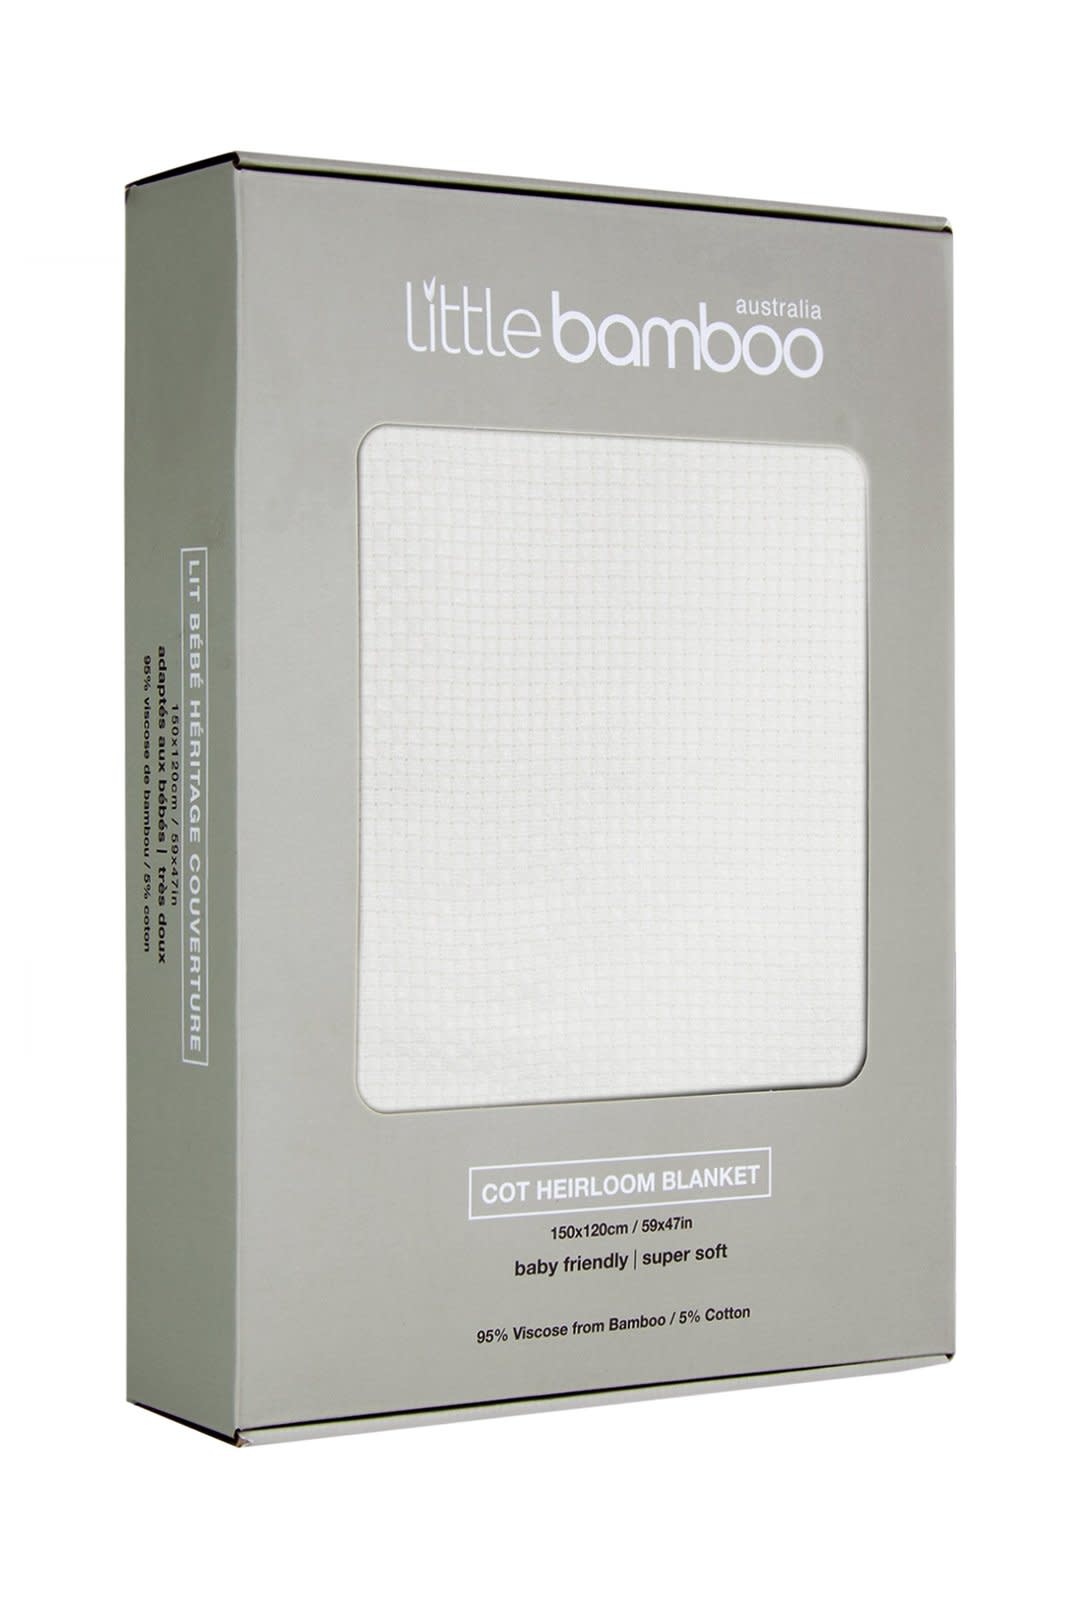 Little Bamboo Little Bamboo Heirloom Blanket Cot - 150 x 120cm